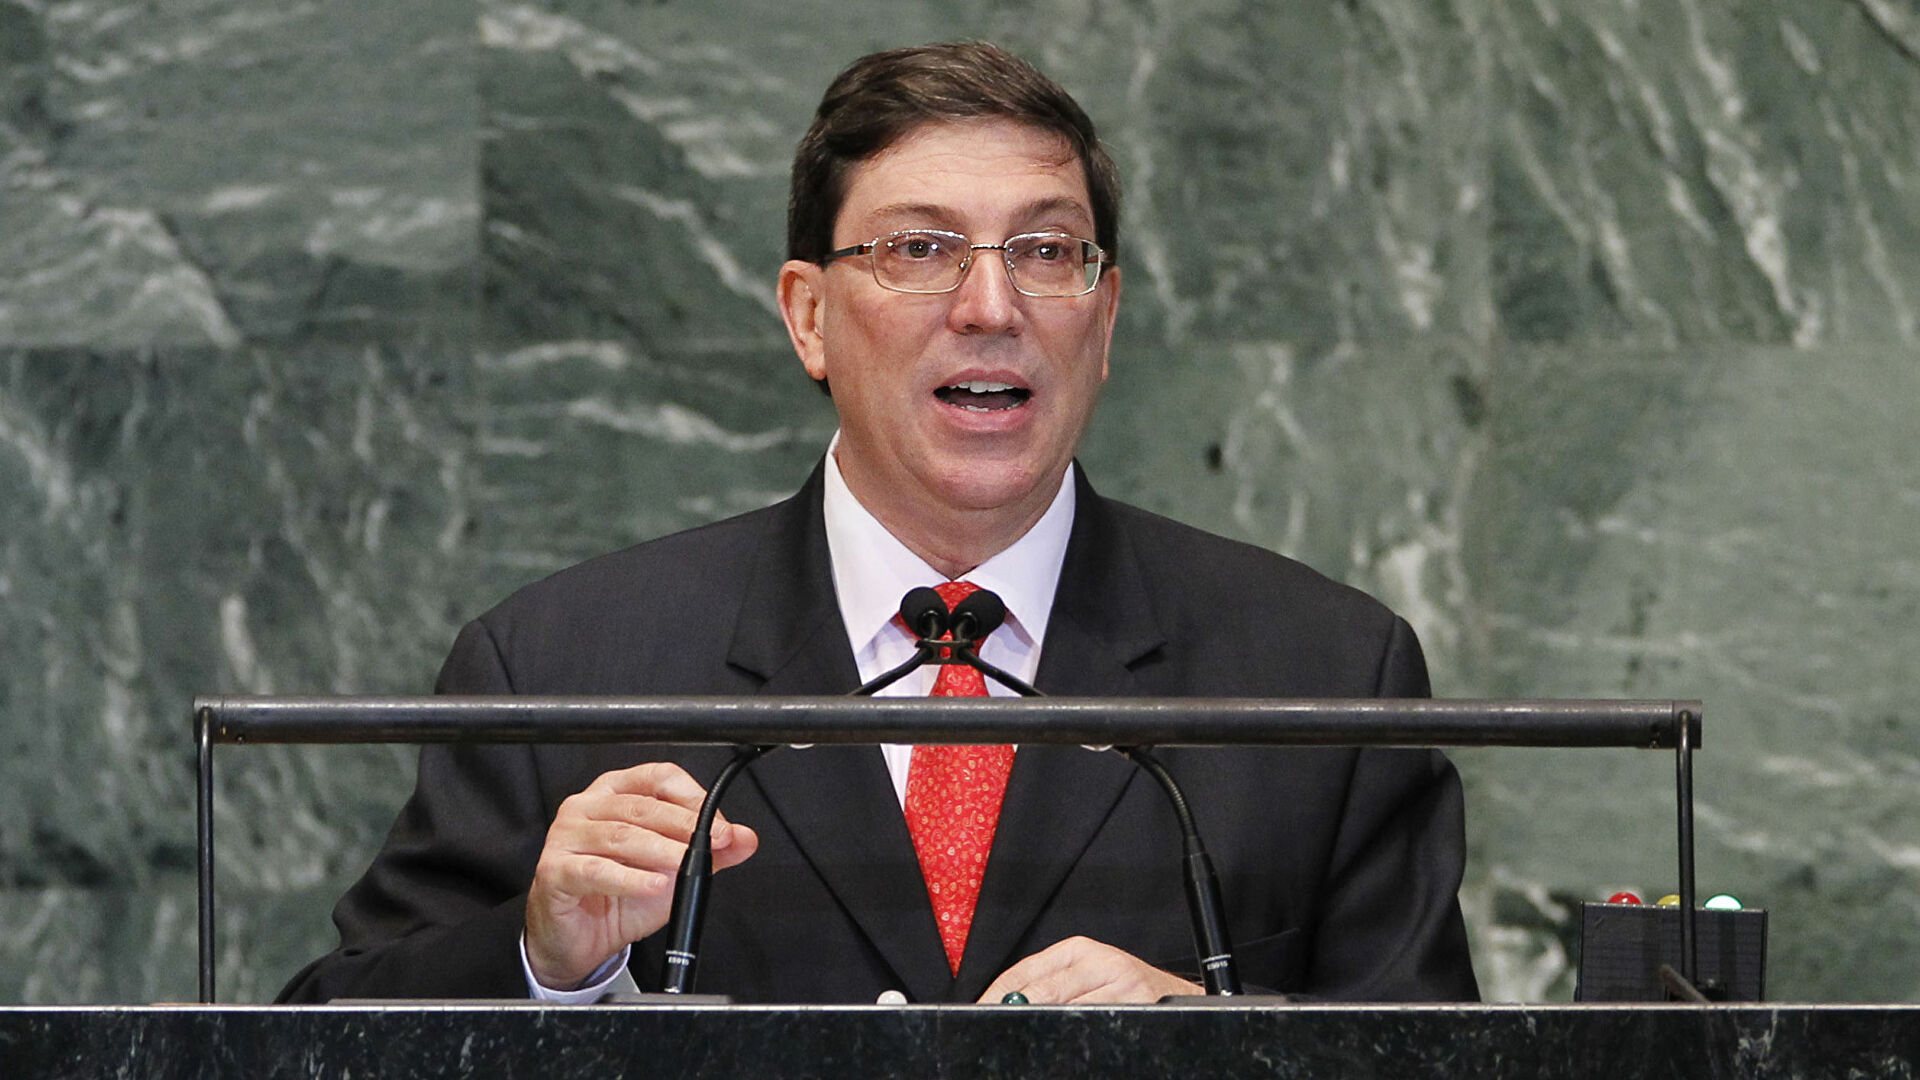 El reclamo de Cuba es que nos dejen en paz Por Bruno Rodríguez Parrilla (*), canciller de Cuba